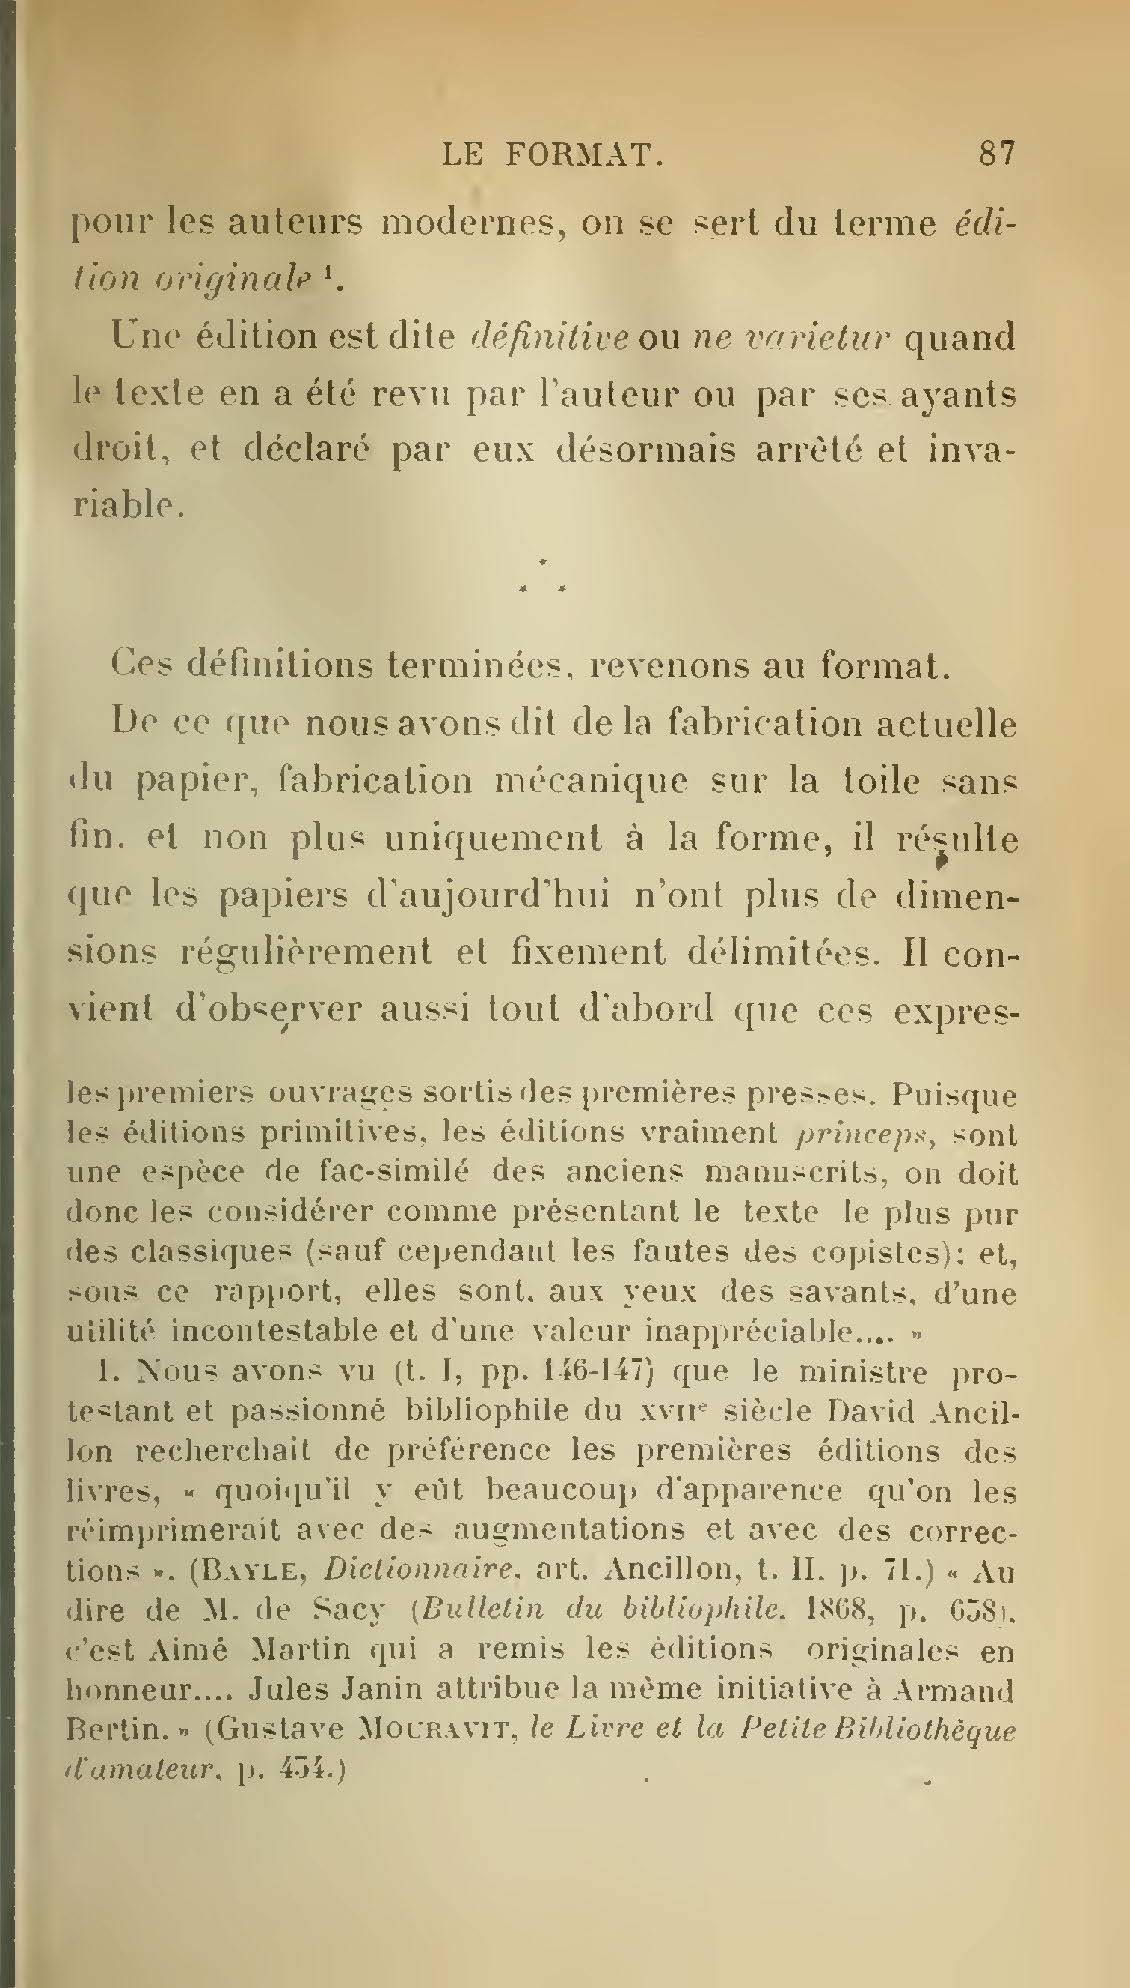 Albert Cim, Le Livre, t. III, p. 87.